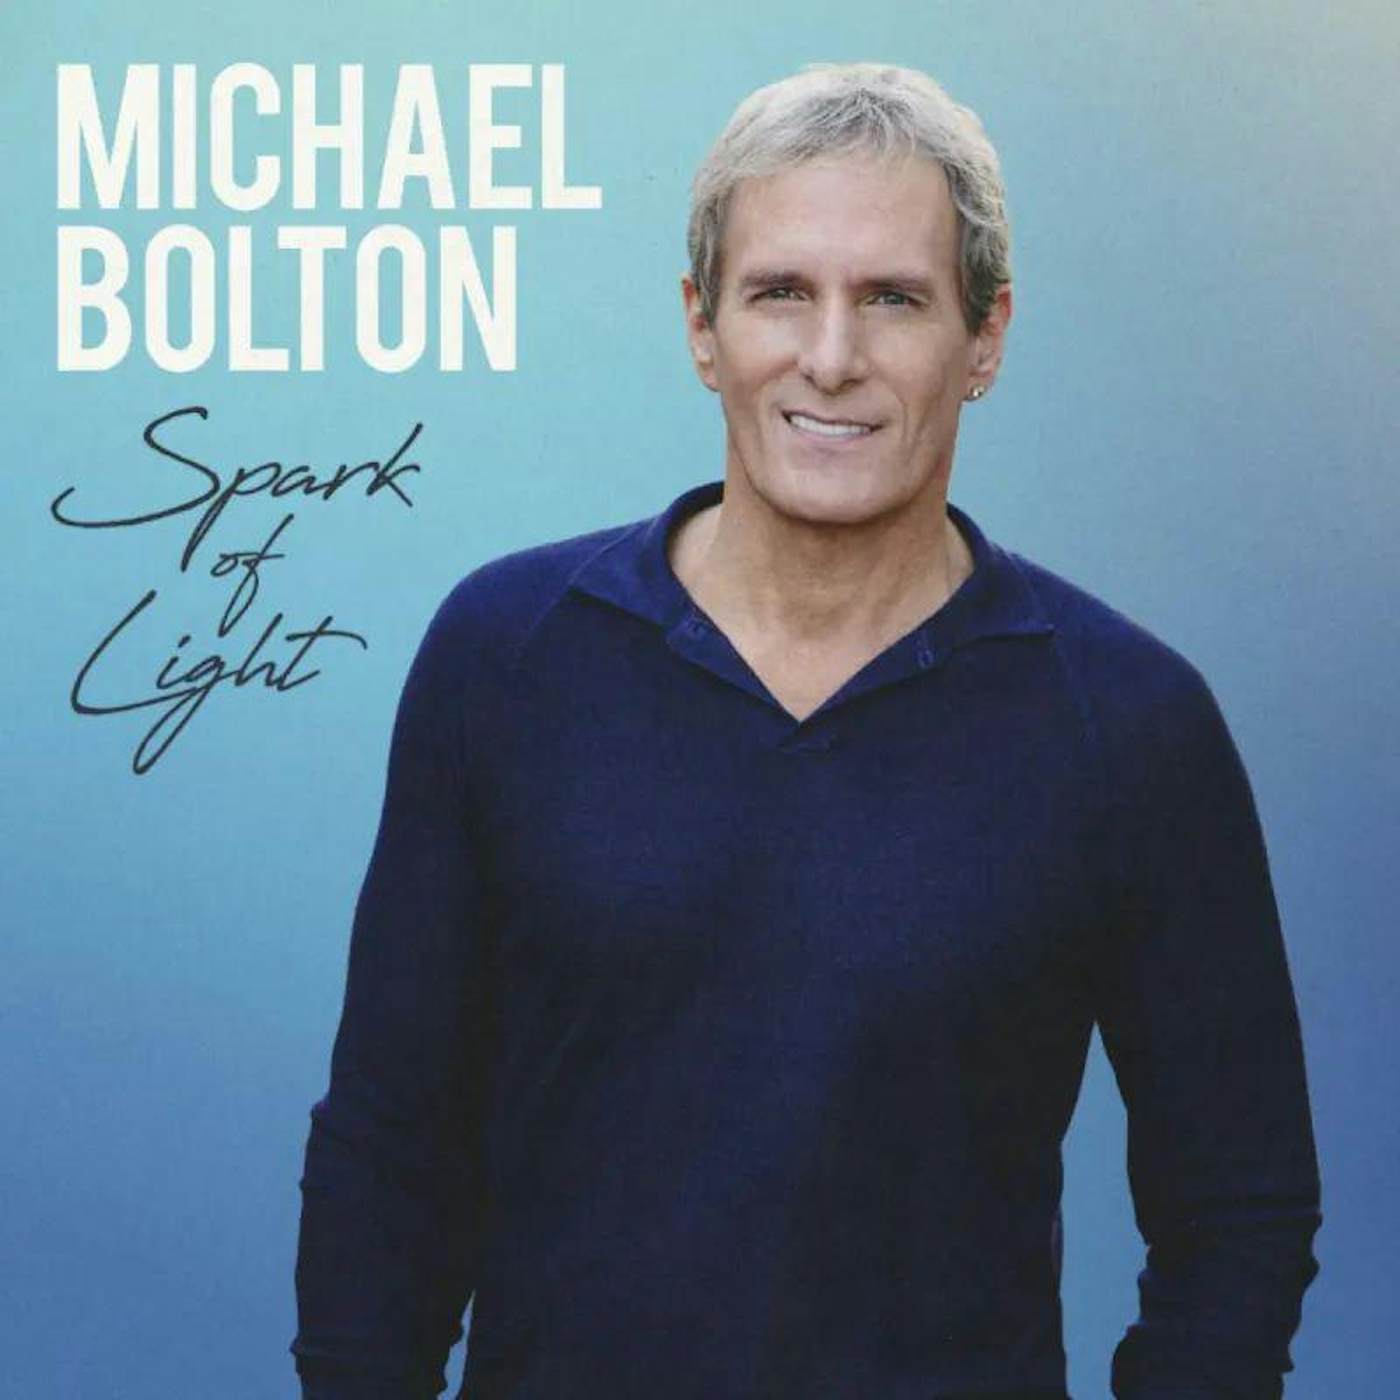 Michael Bolton Spark of Light Vinyl Record